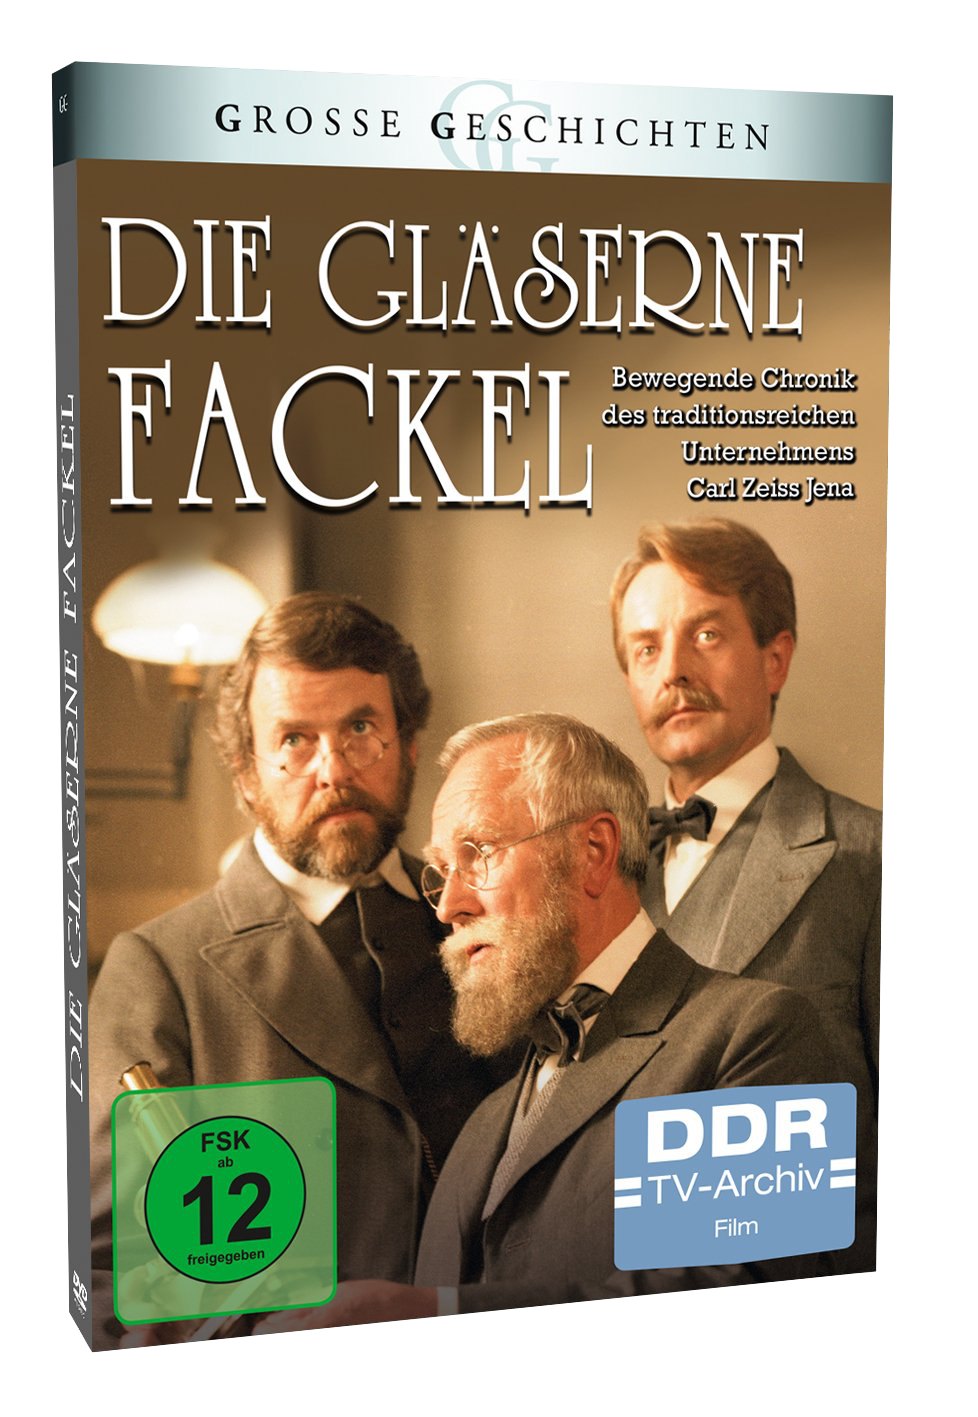 Die gläserne Fackel  (4 DVD)